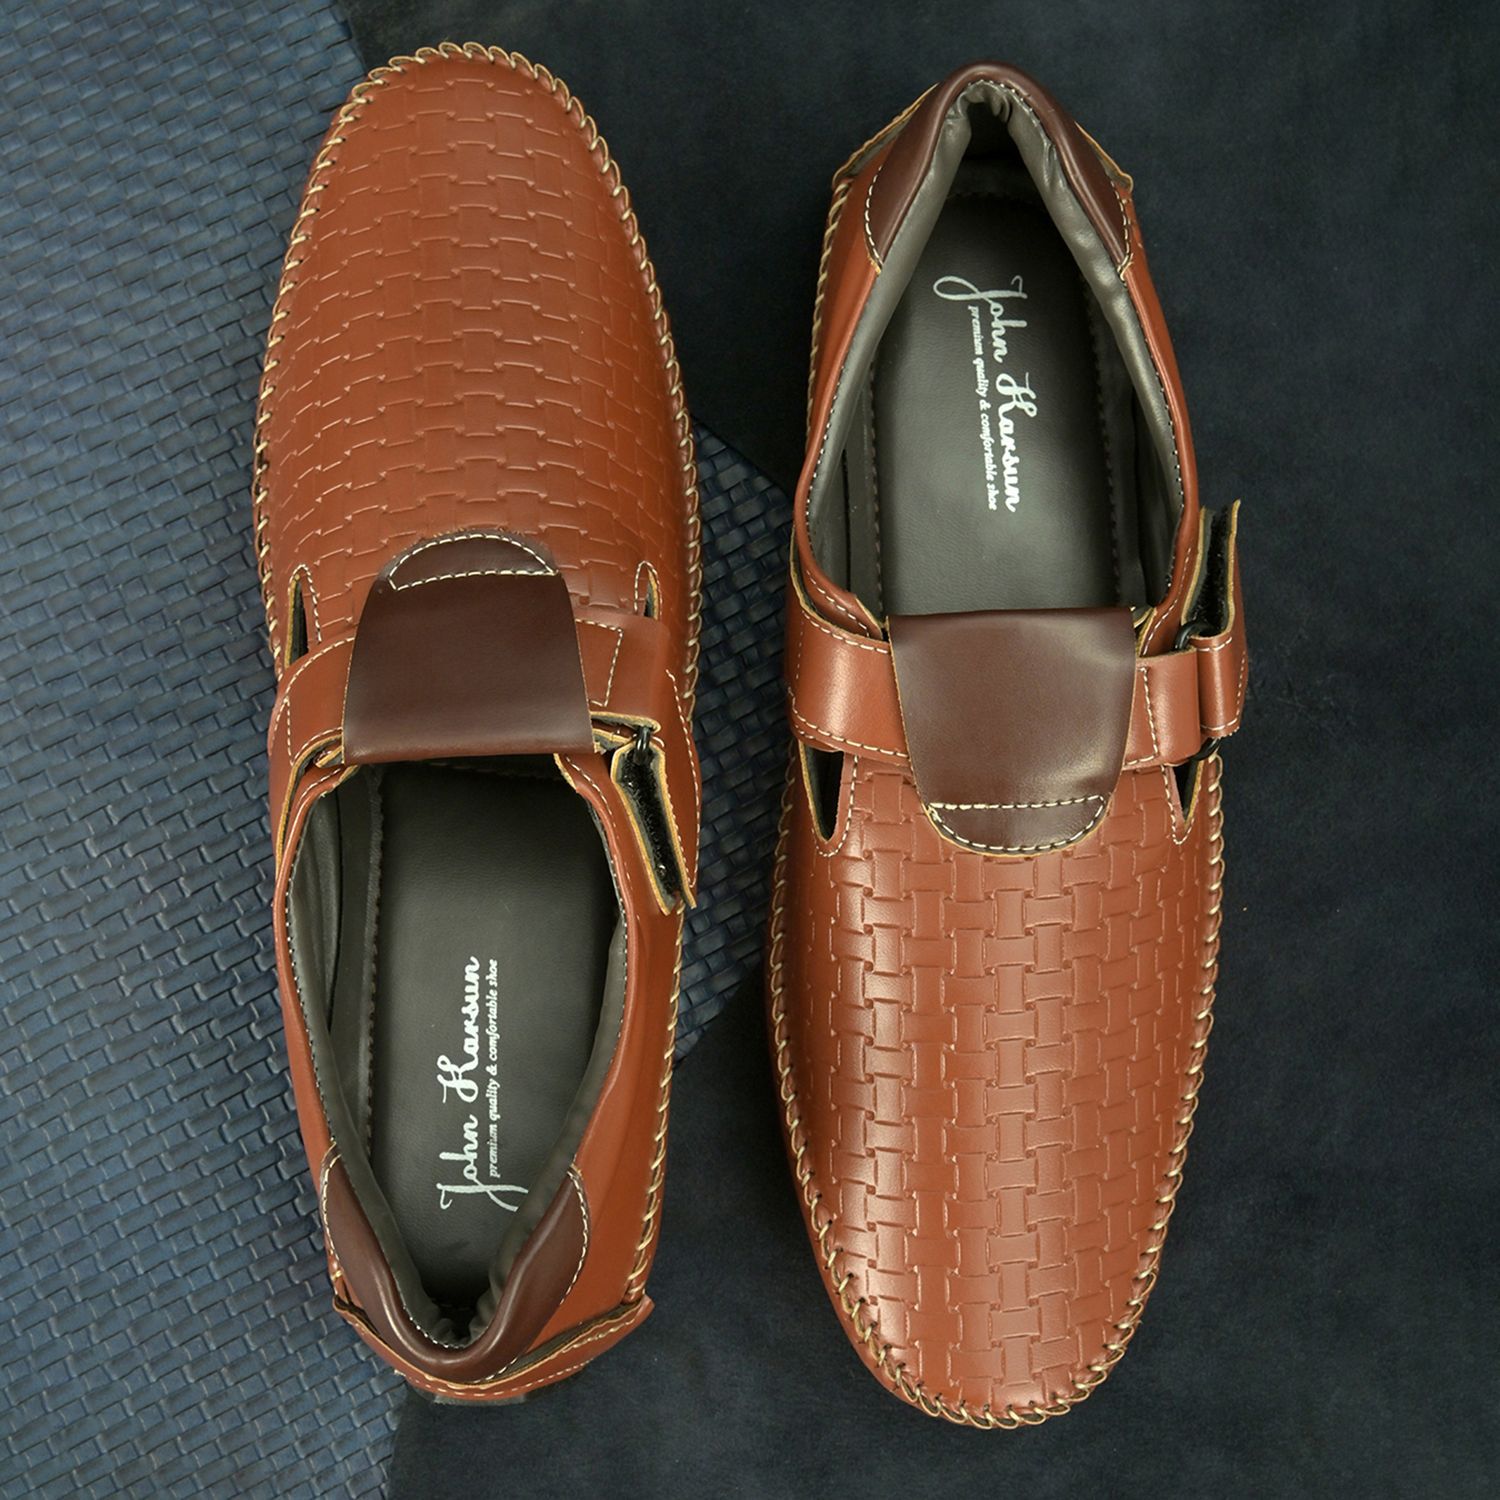     			John Karsun Tan Synthetic Leather Sandals